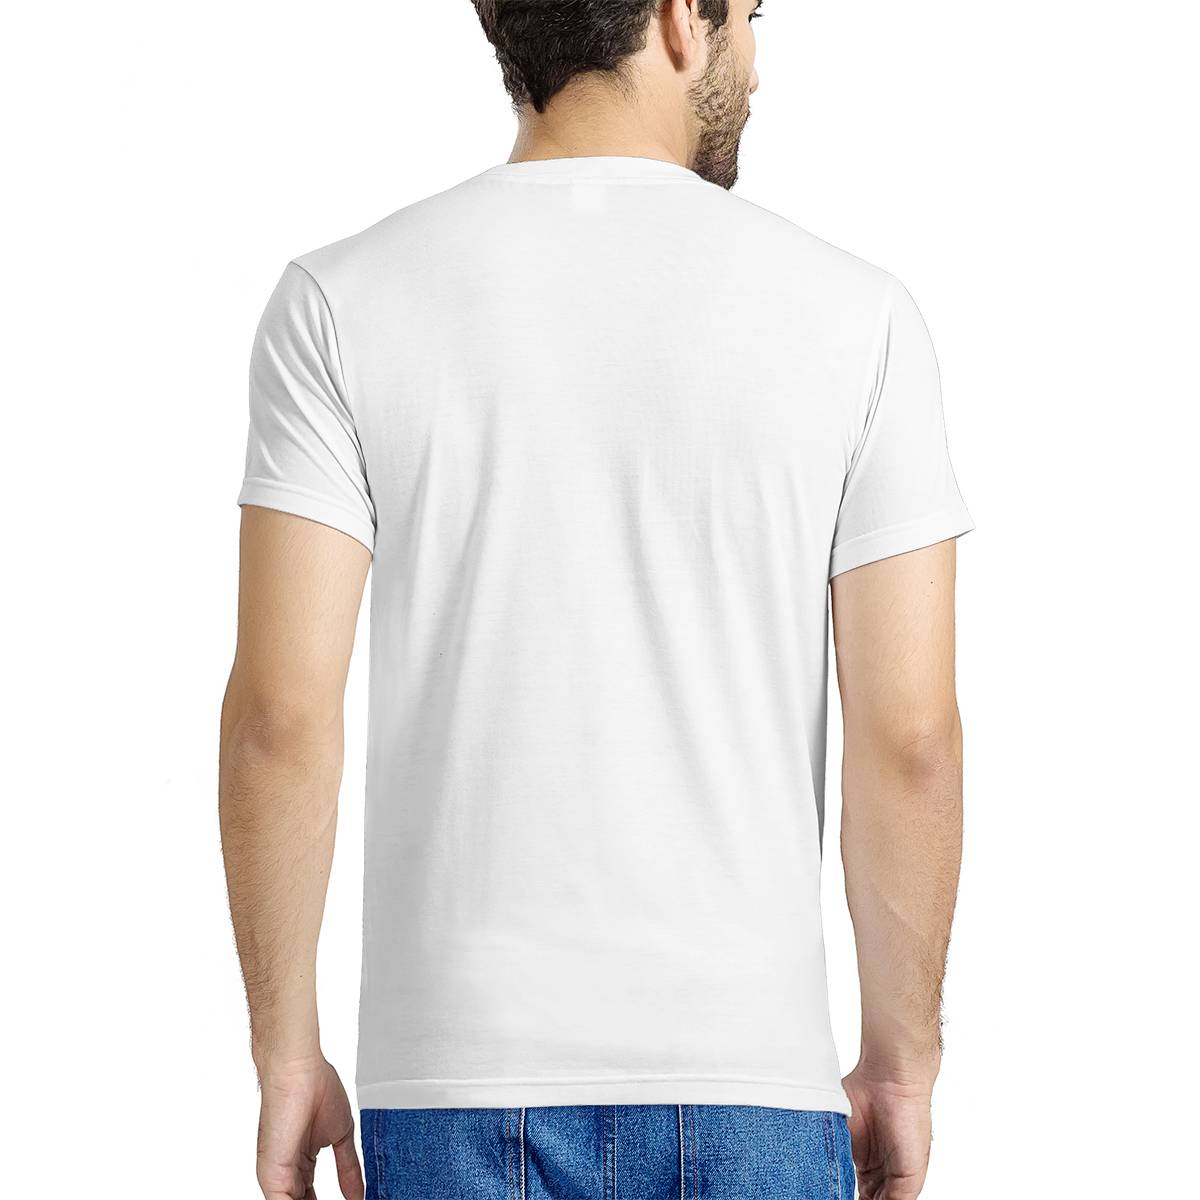 -- DV-007 Single Print White T-shirt --